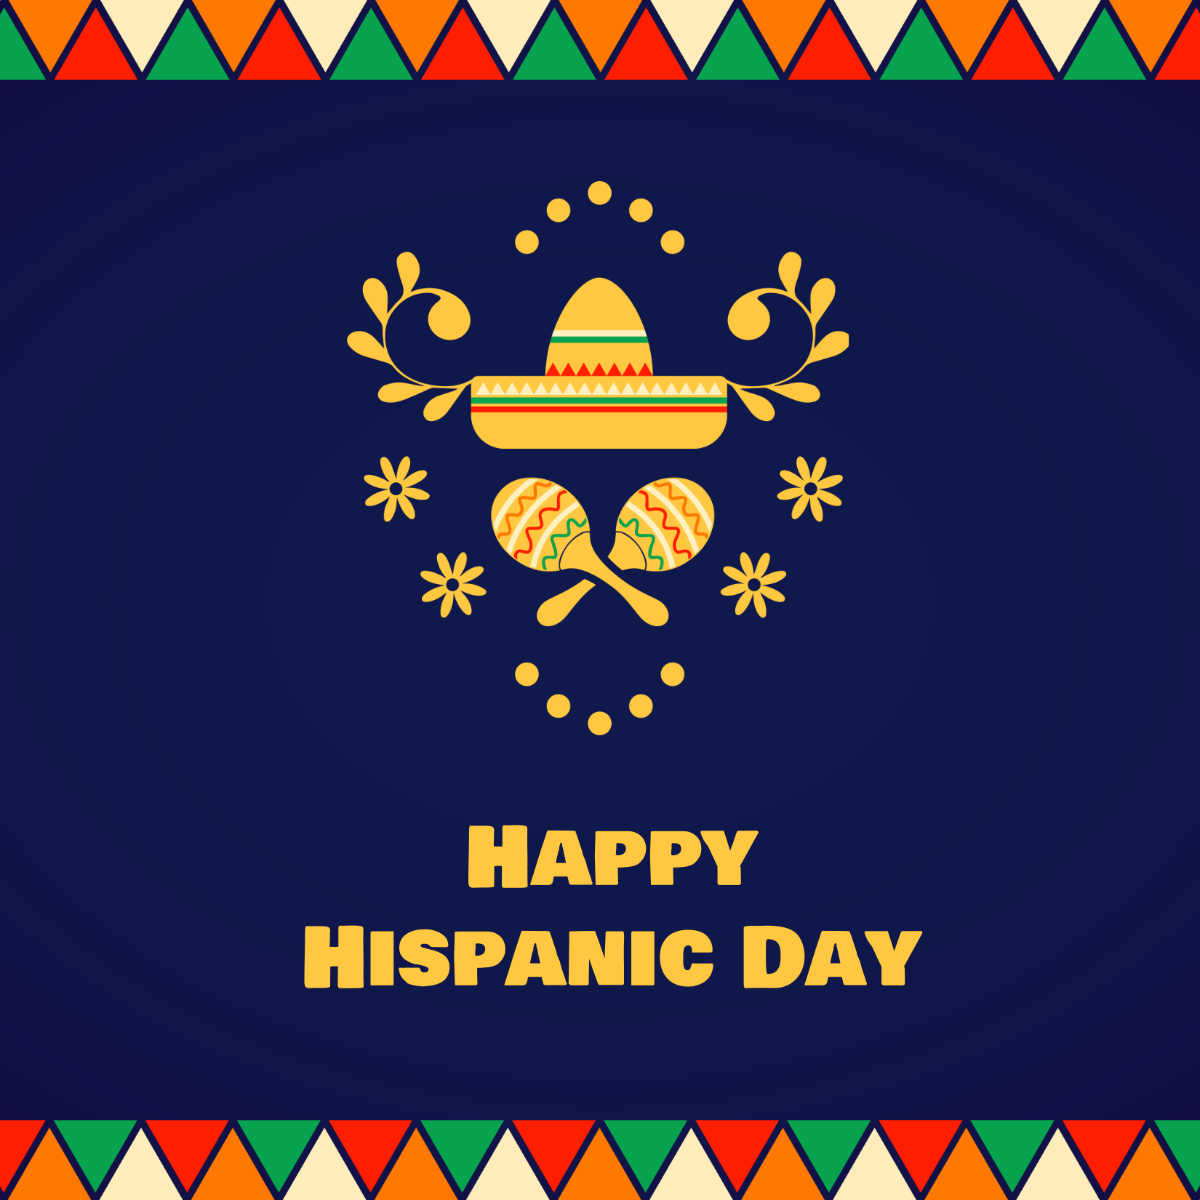 Free Hispanic Day Instagram Post Template